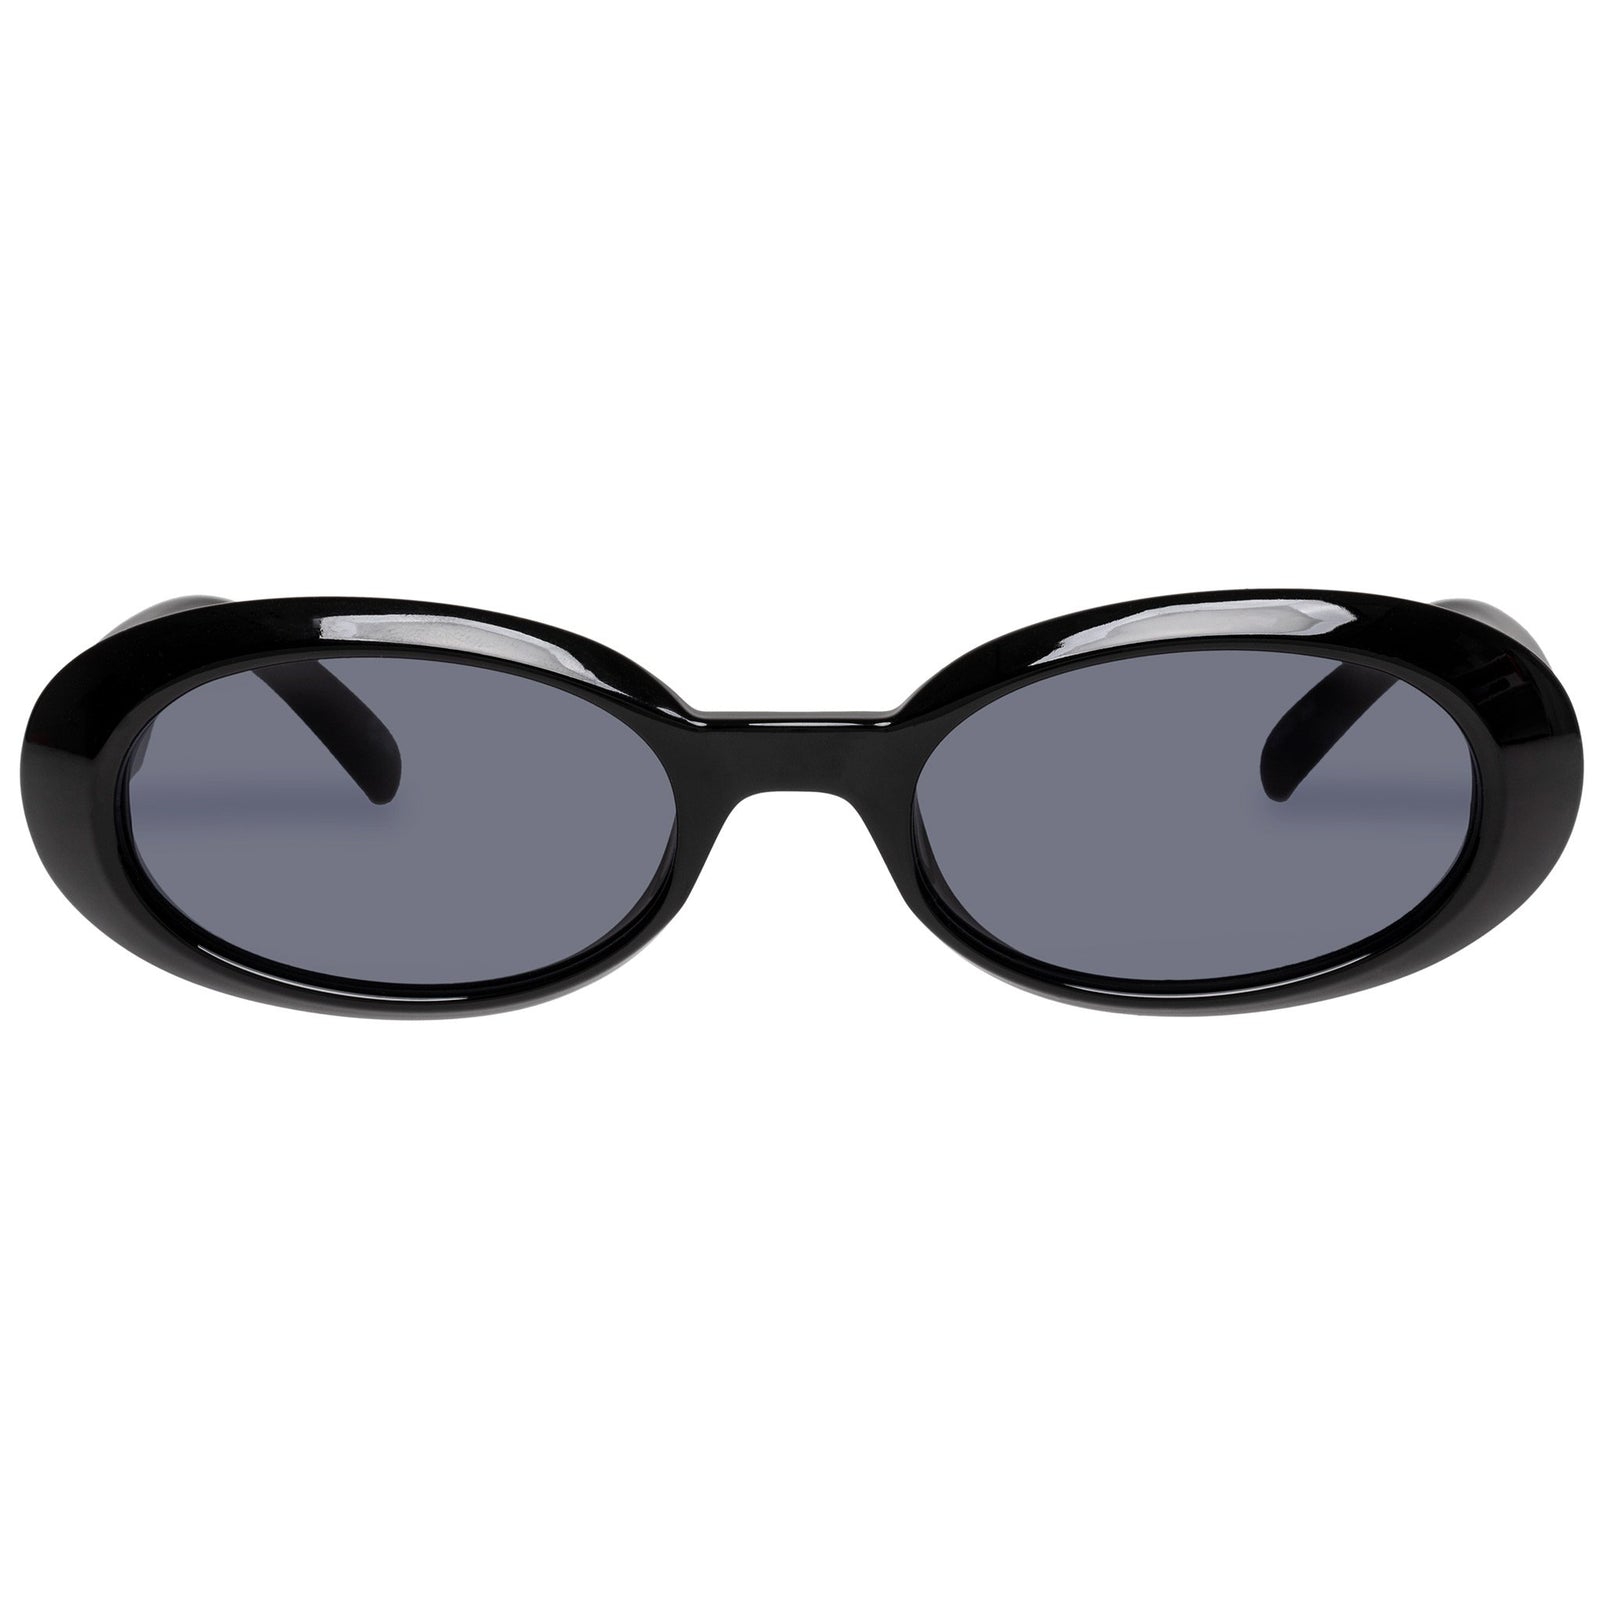 Work It! Black Uni-Sex Oval Sunglasses